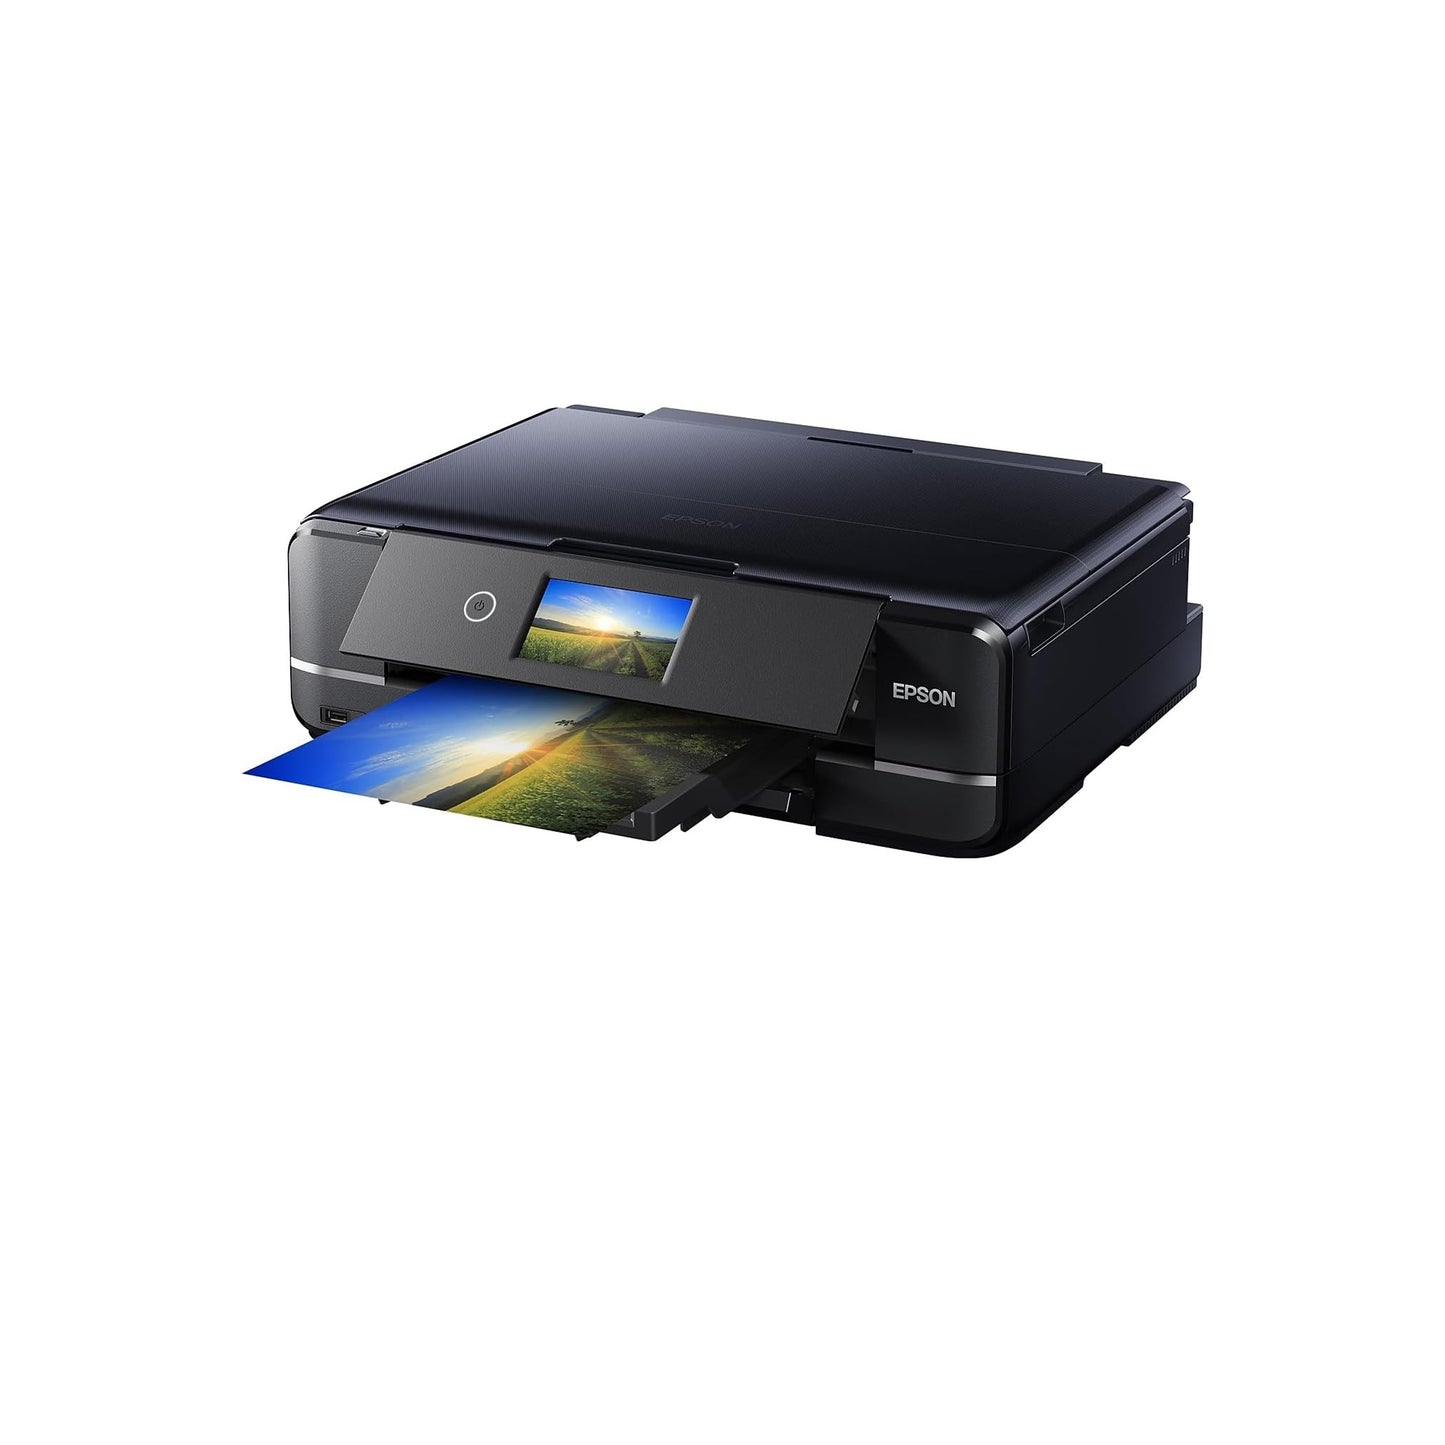 طابعة صور ملونة لاسلكية Epson Expression Photo XP-970 مع ماسح ضوئي وناسخة، أسود 